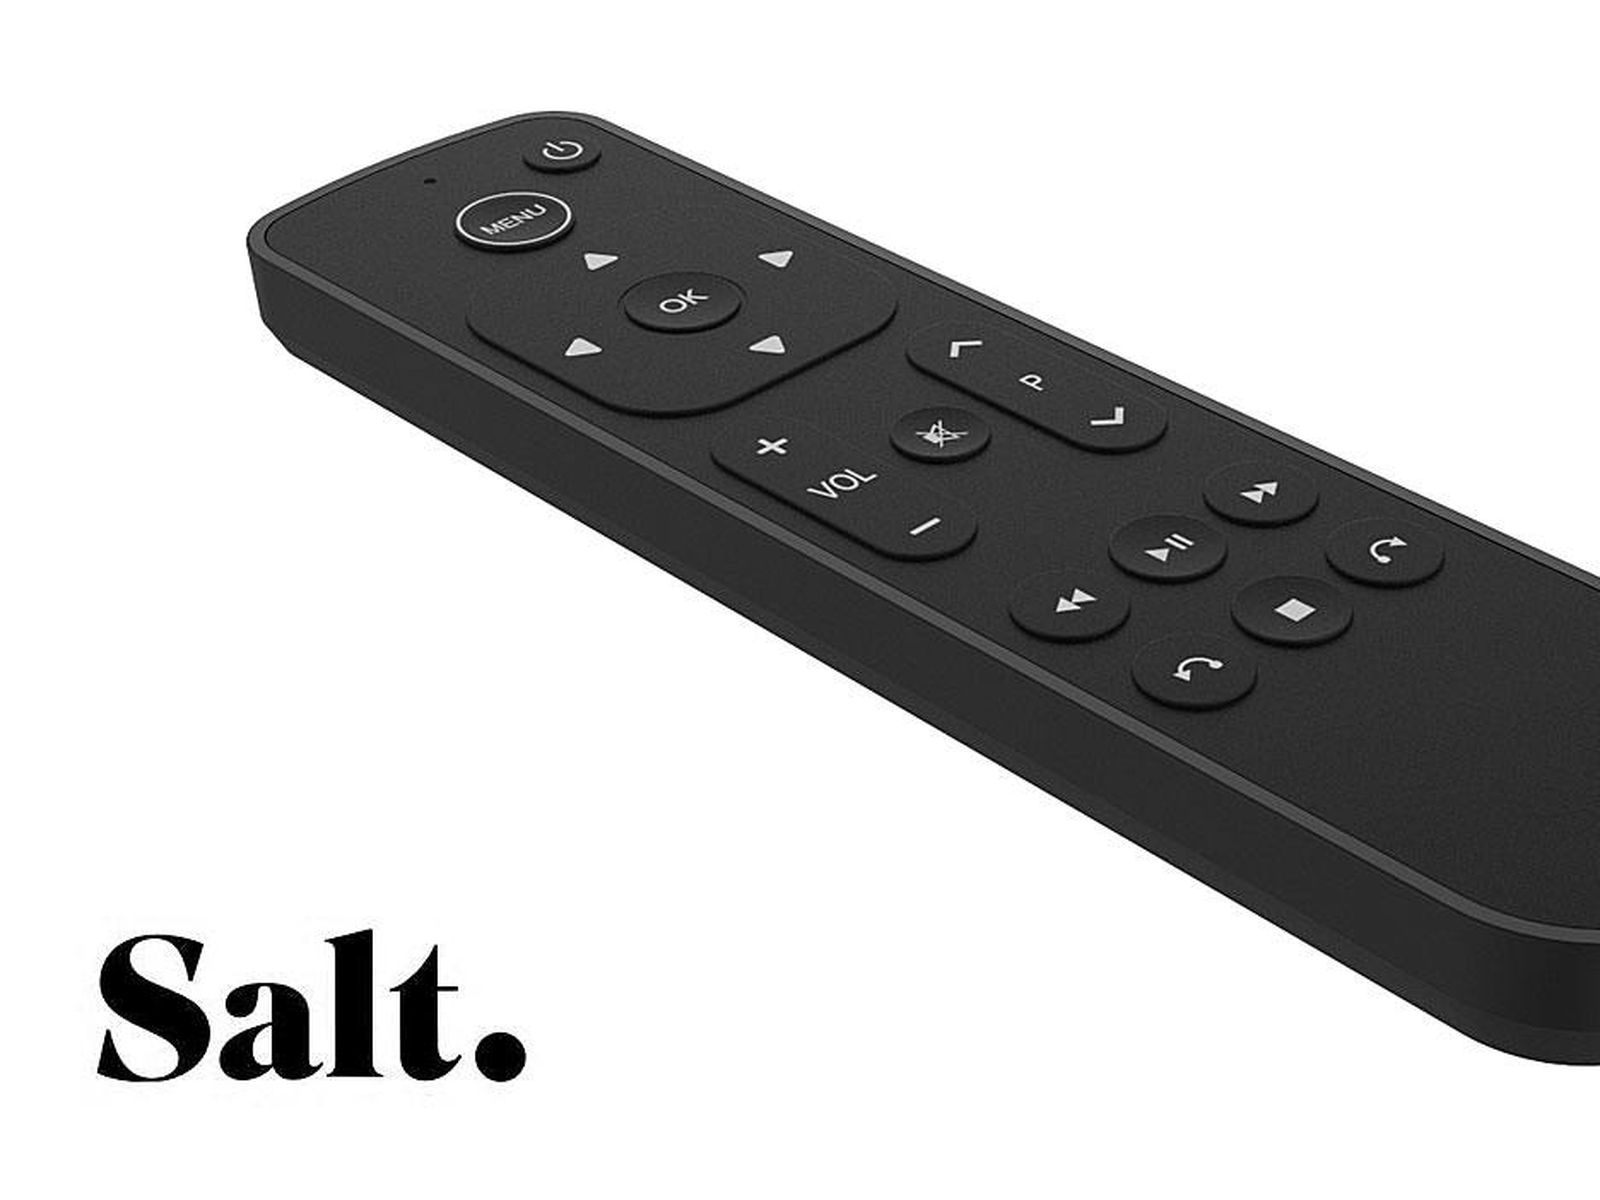 Swiss Fiber TV Service 'Salt' Launches Alternative Apple 4K Remote Control for Frustrated Customers - MacRumors